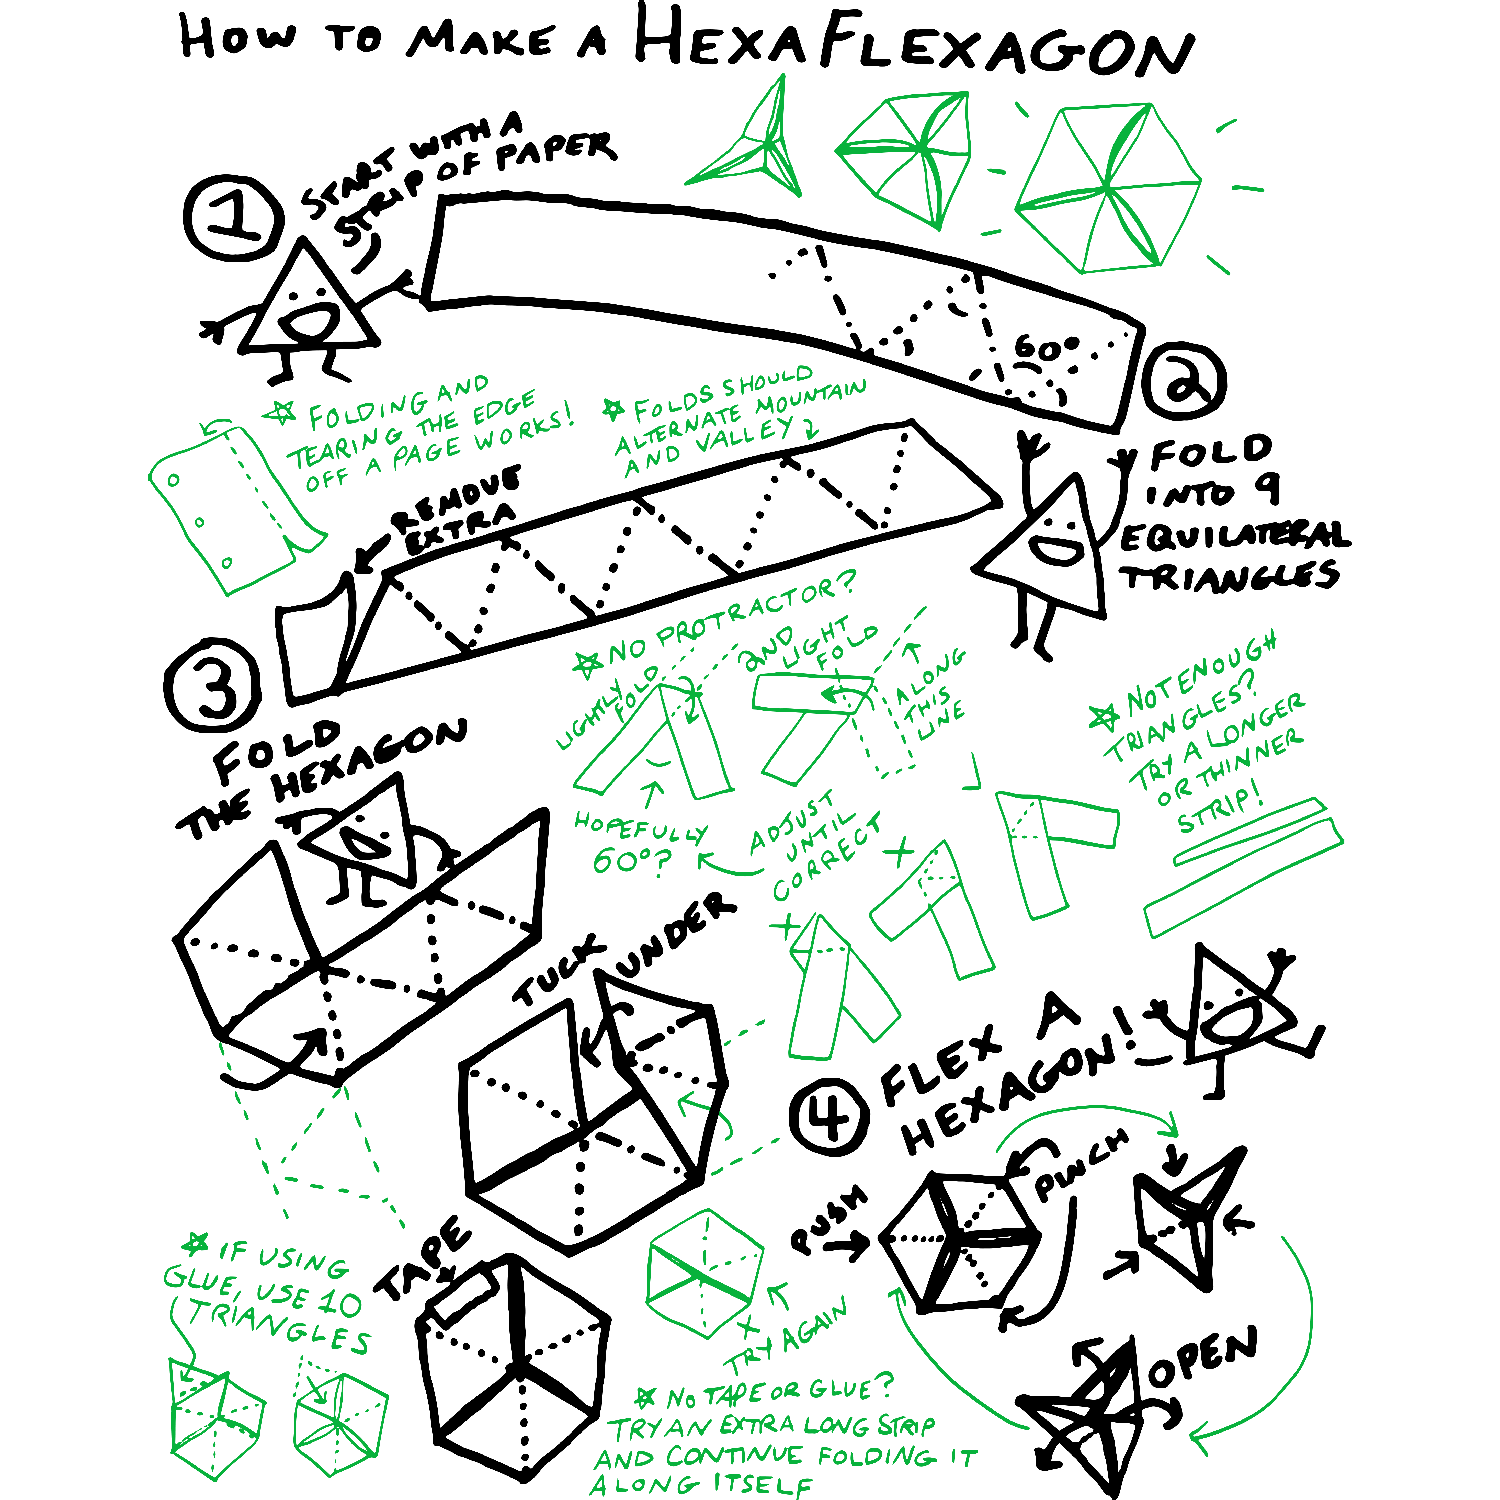 general knowledge on hexaflexagons!